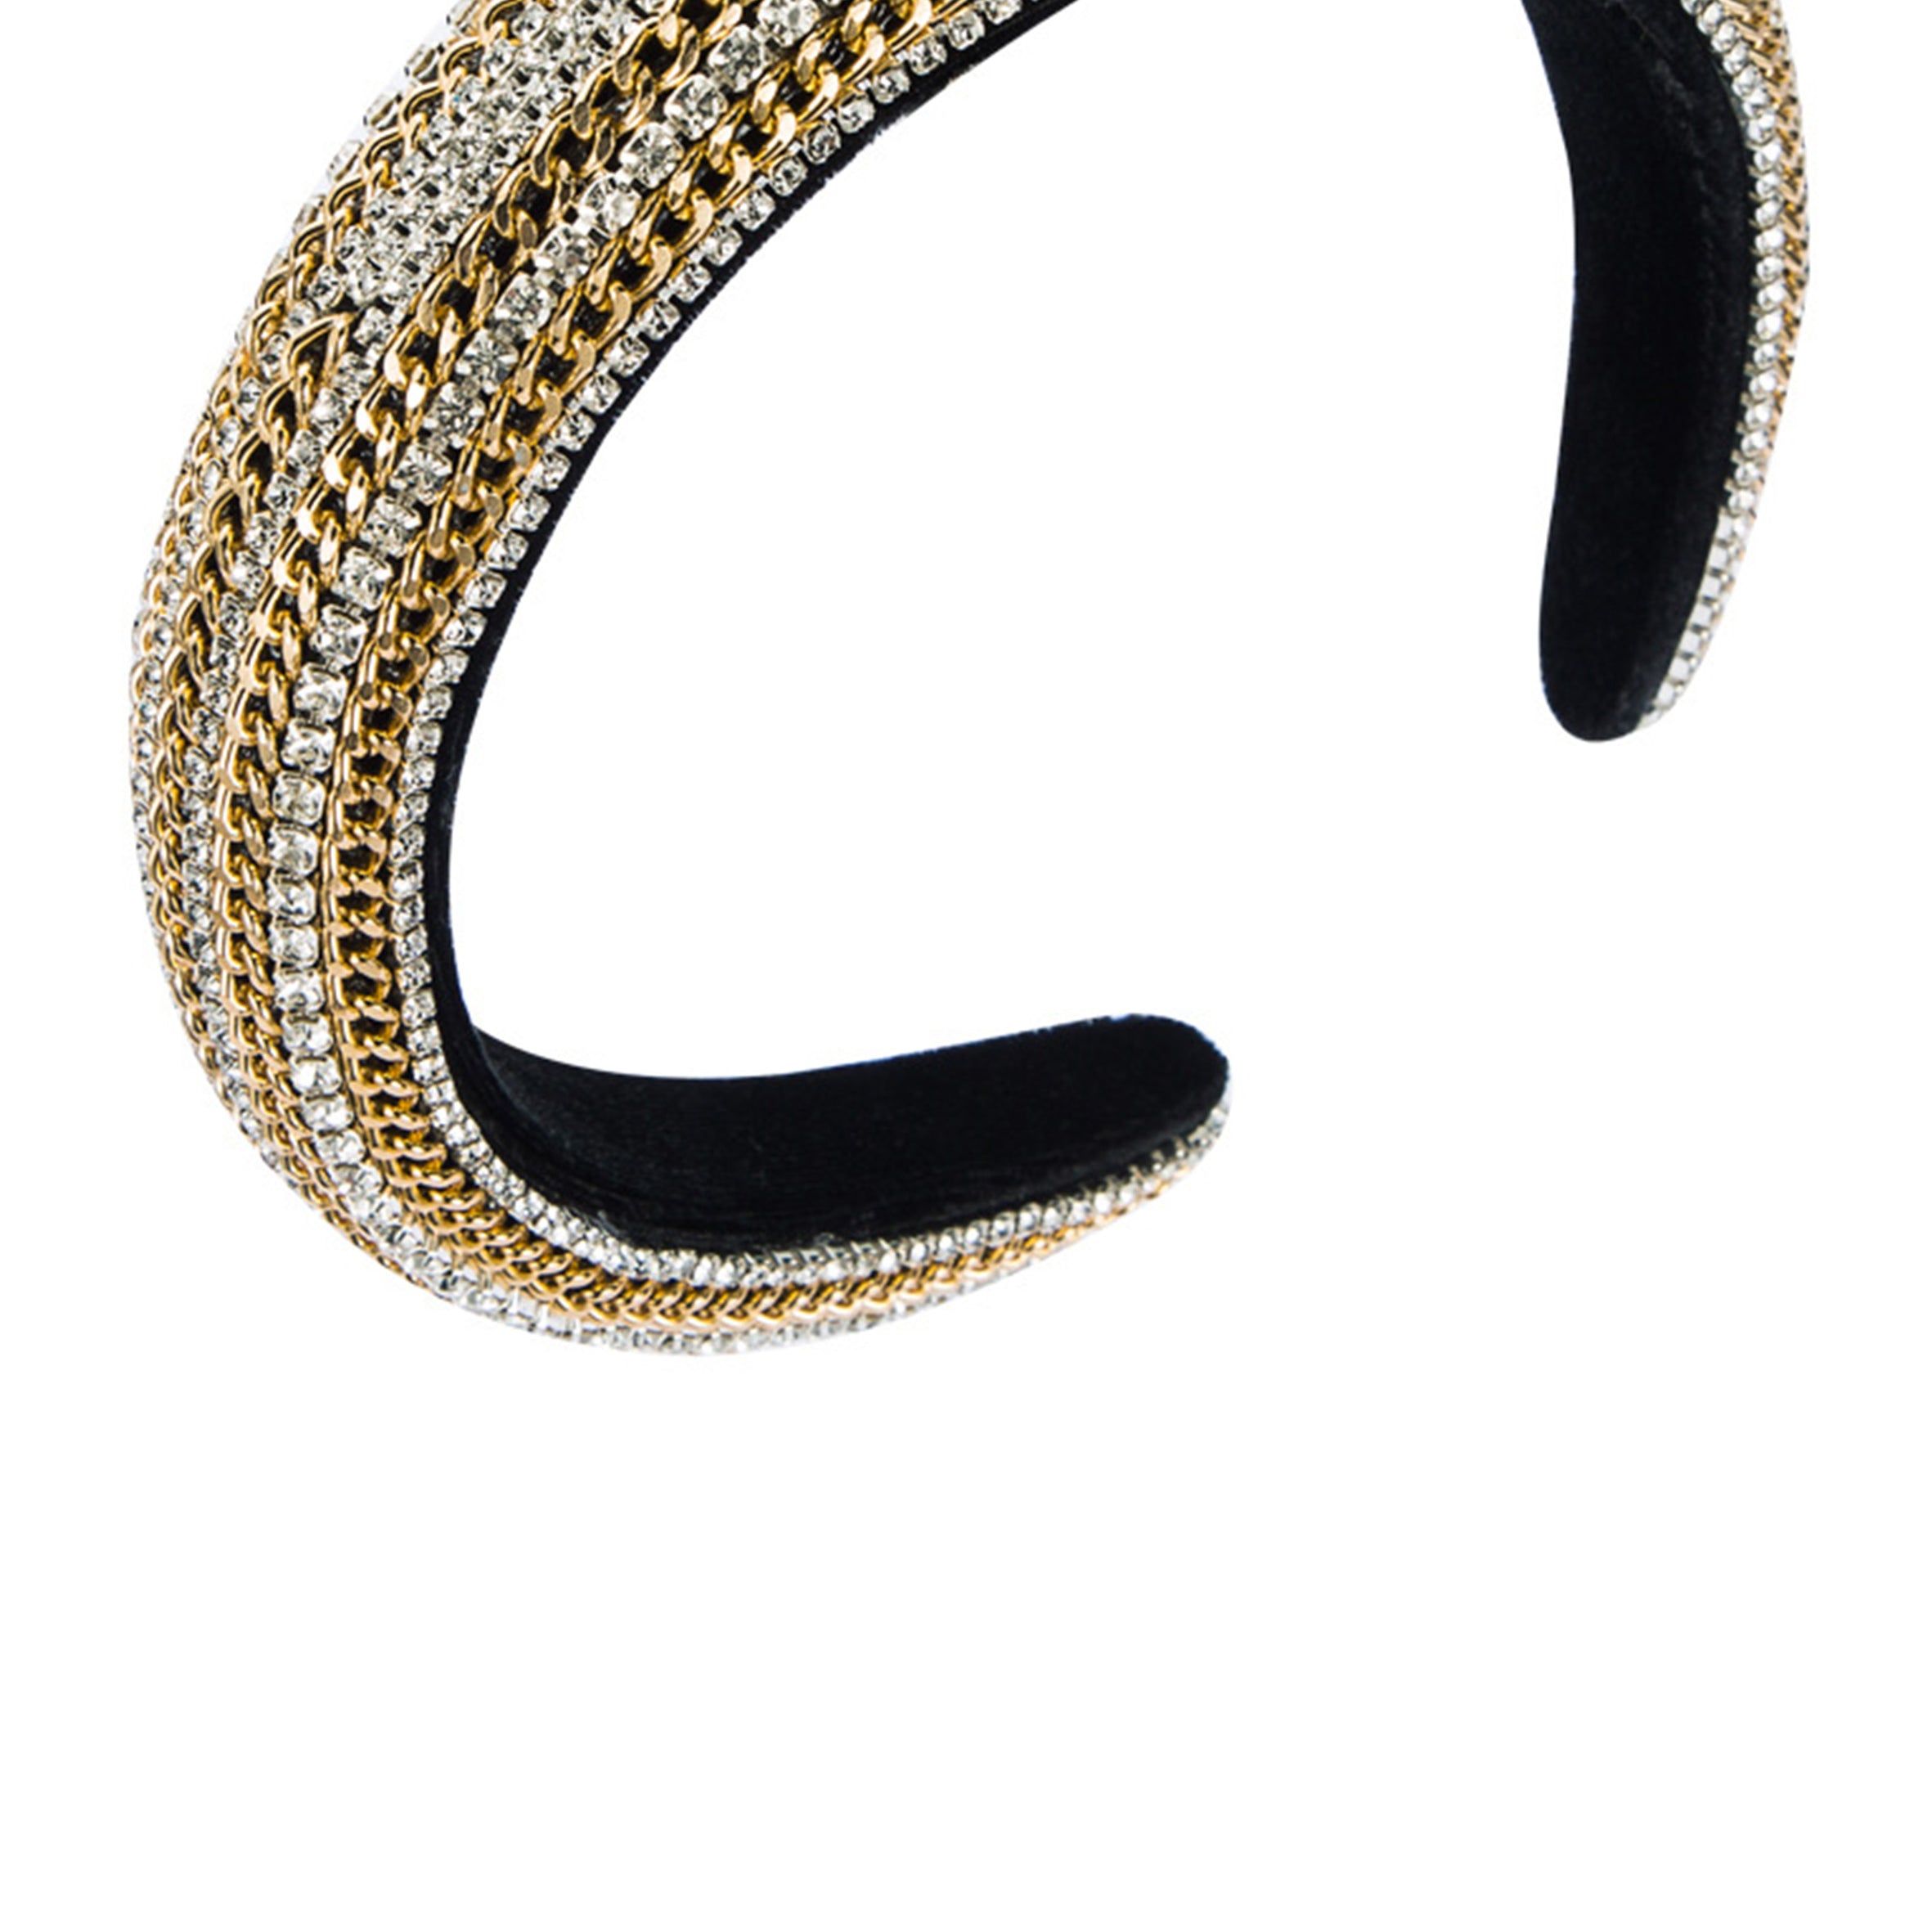 Rhinestone Chain Headband L3016